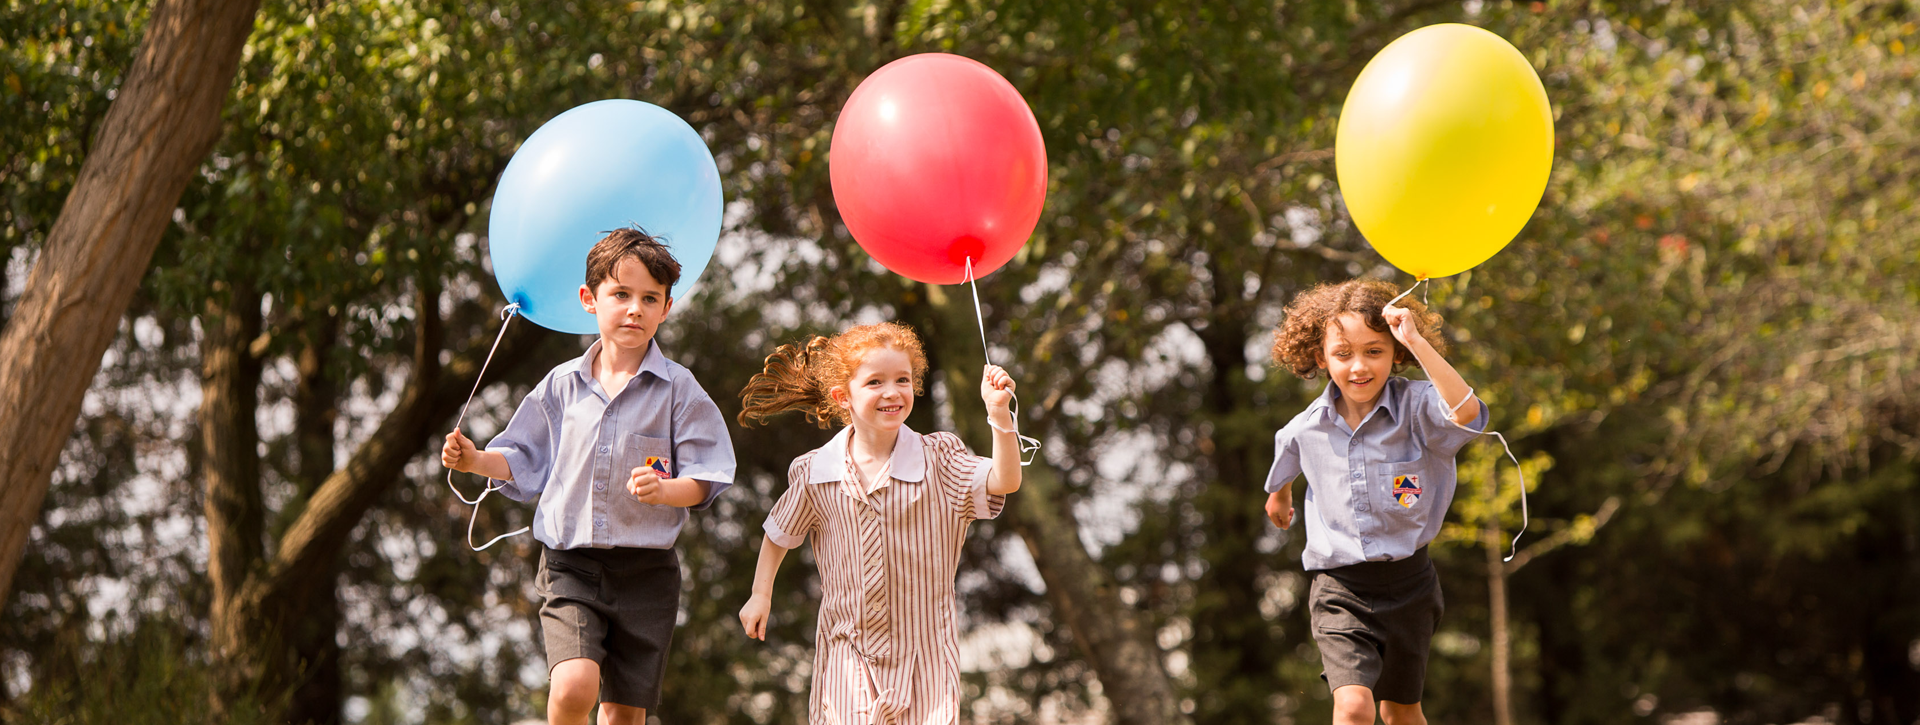 Children Running with Balloons